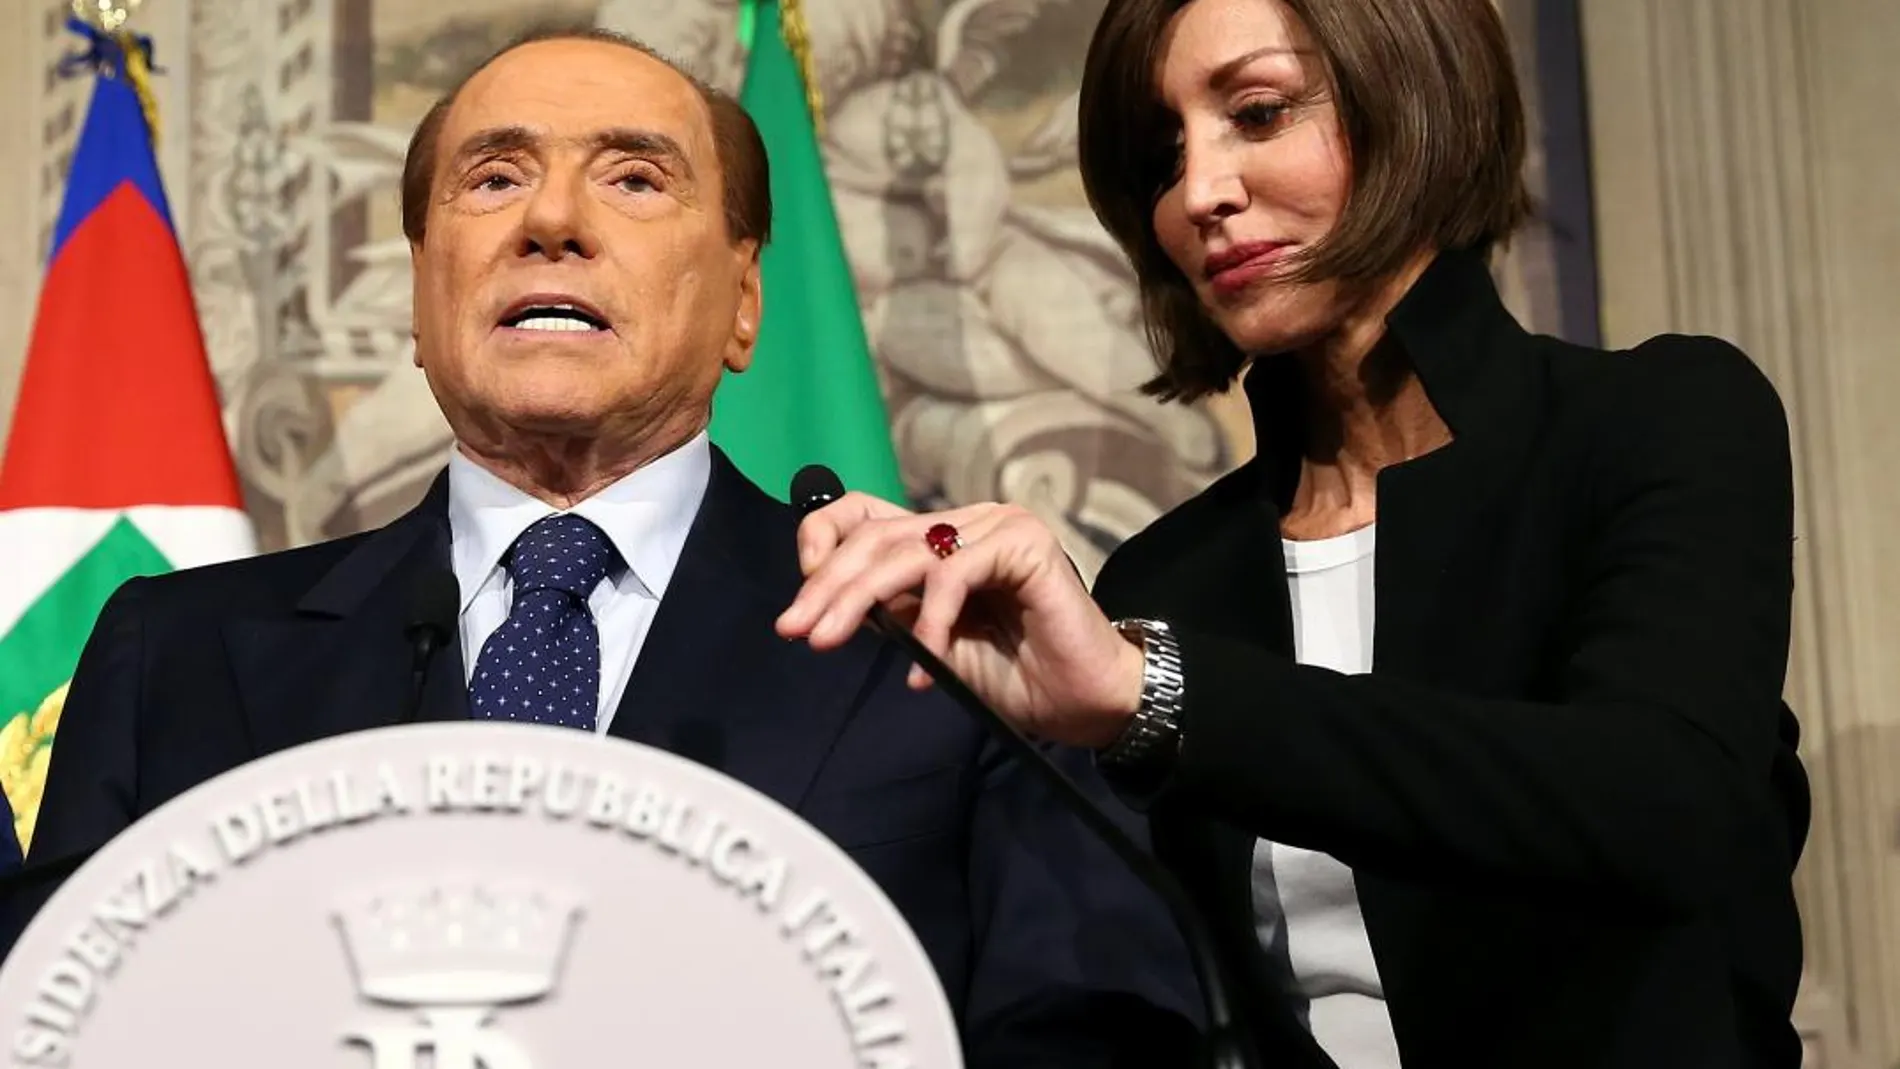 La senadora de Forza Italia, Anna Maria Bernini, coloca el micrófono de Silvio Berlusconi antes de la rueda de prensa, hoy en Roma